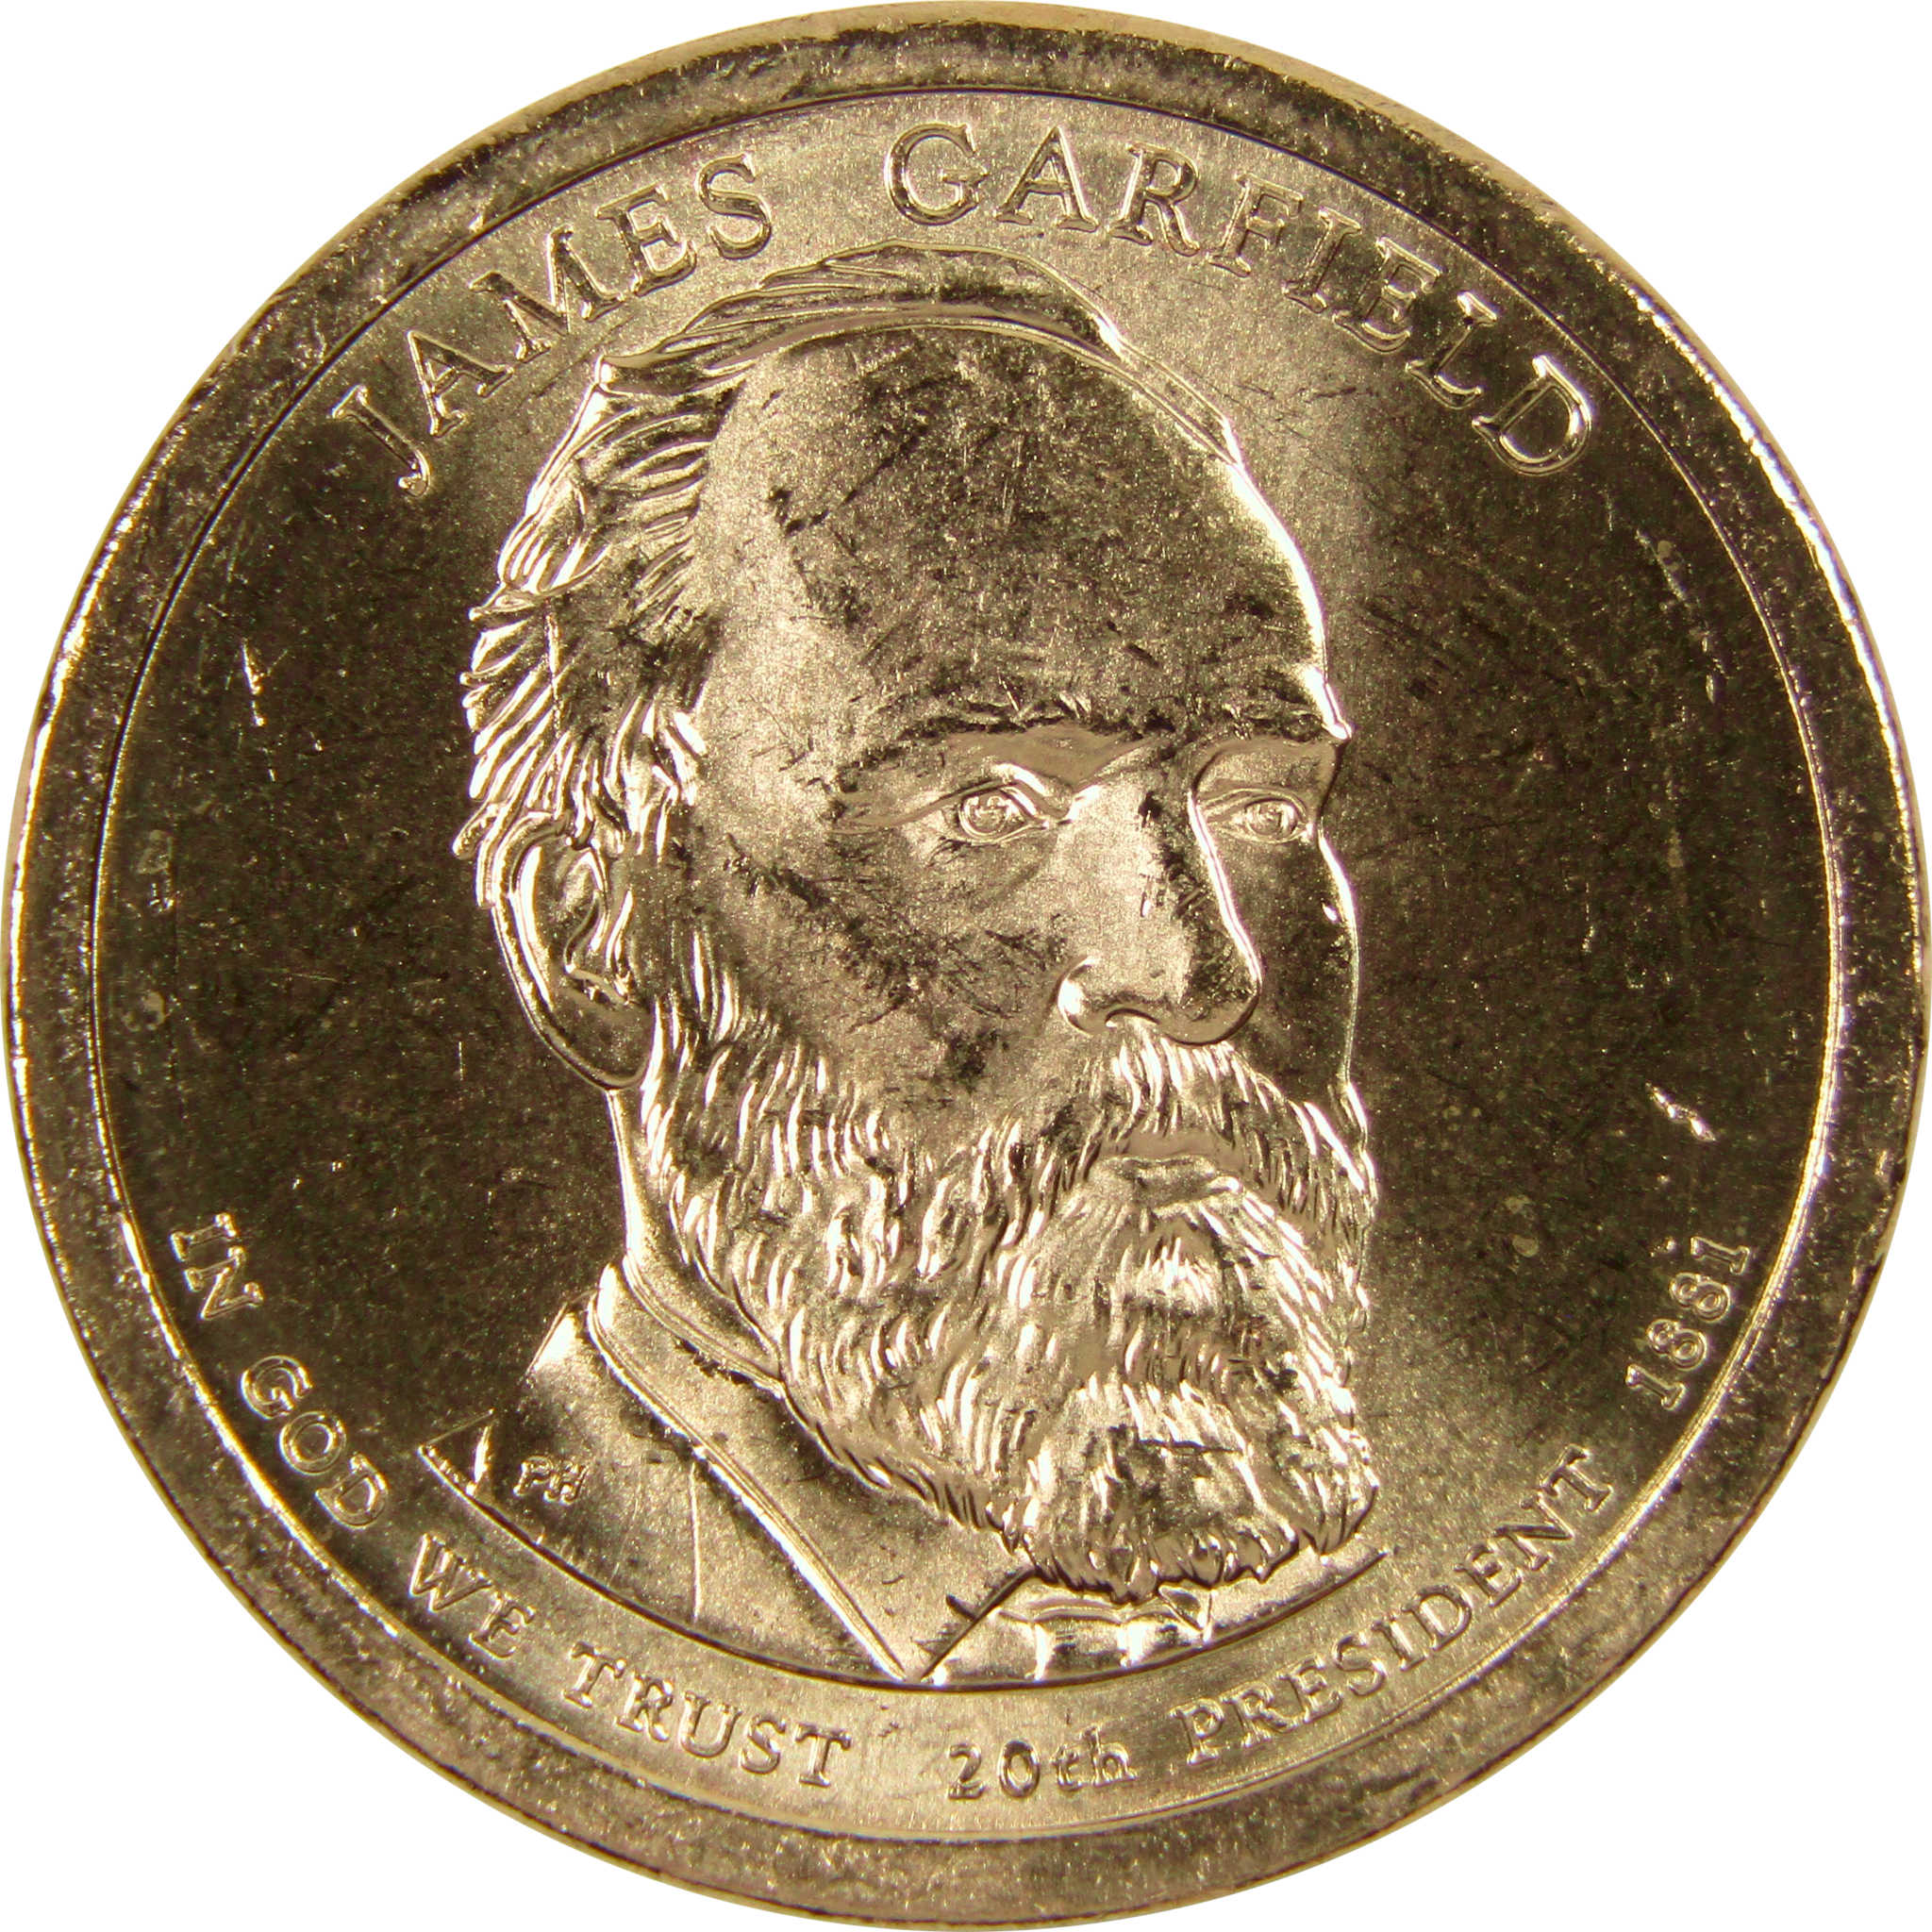 2011 P James A Garfield Presidential Dollar BU Uncirculated $1 Coin